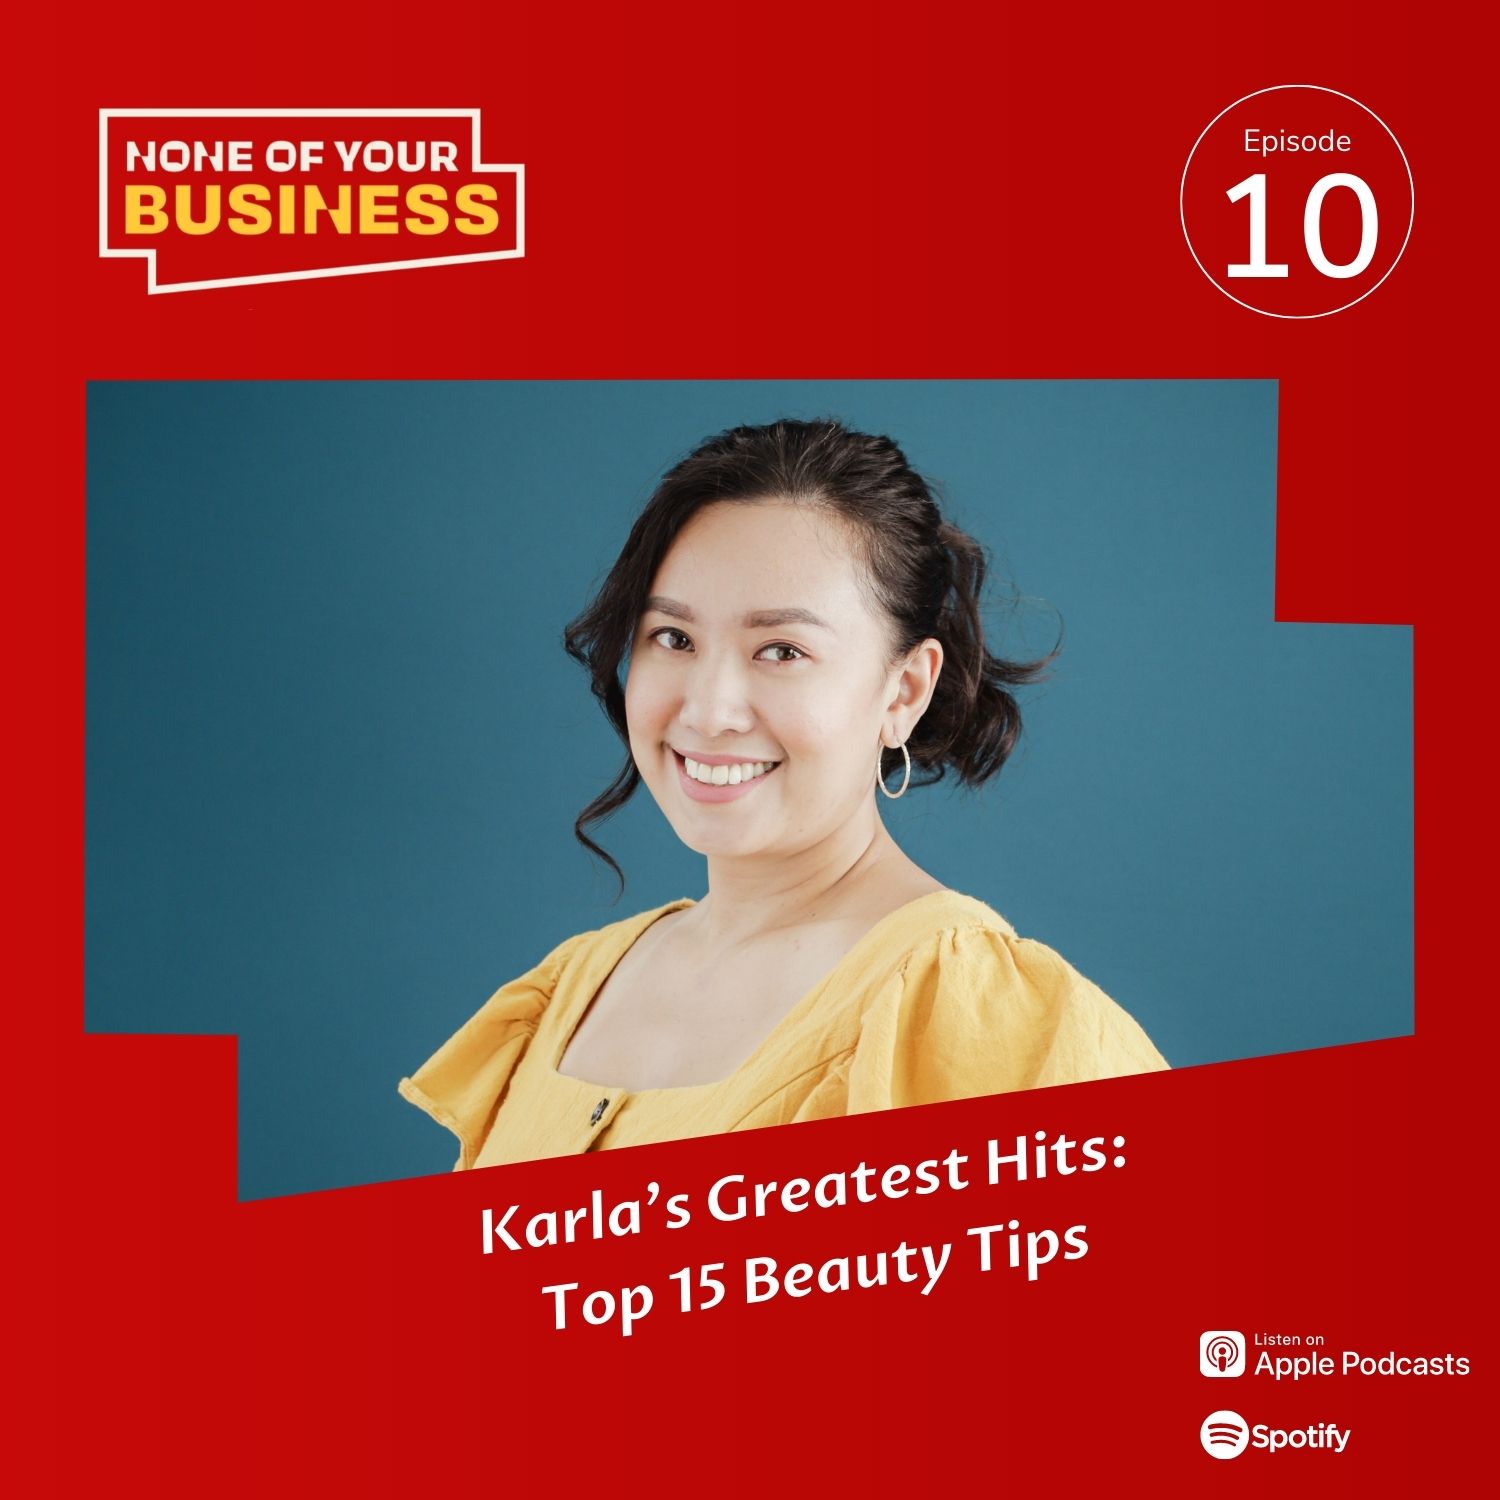 Karla's Greatest Hits: Top 15 Beauty Tips